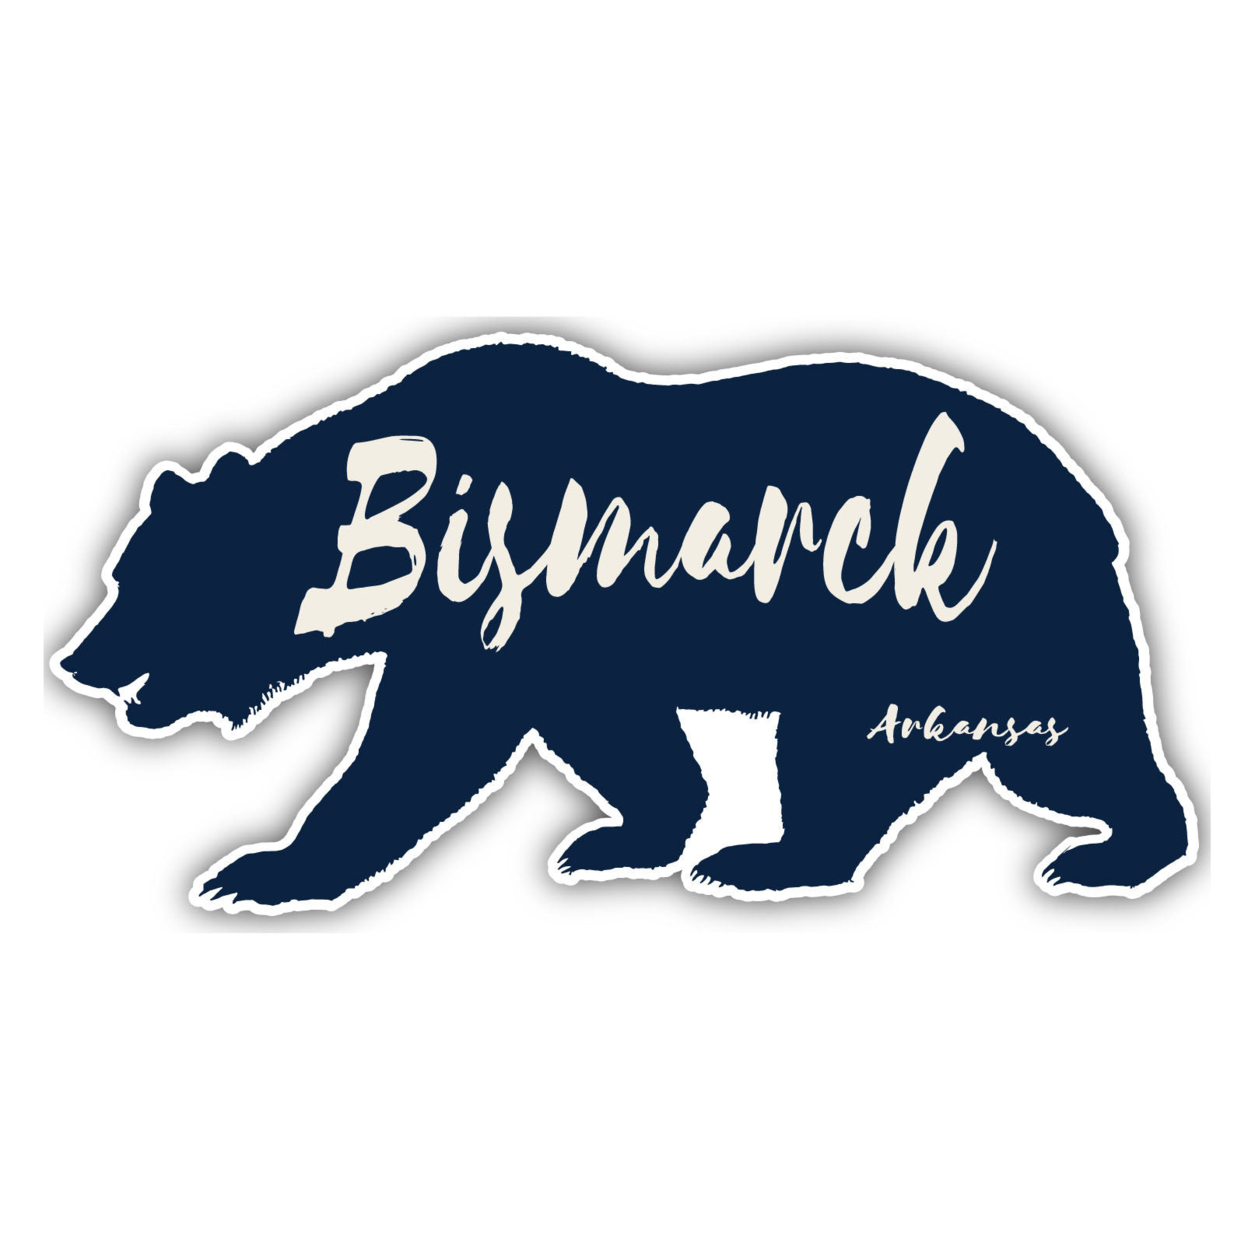 Bismarck Arkansas Souvenir Decorative Stickers (Choose Theme And Size) - 4-Pack, 8-Inch, Bear